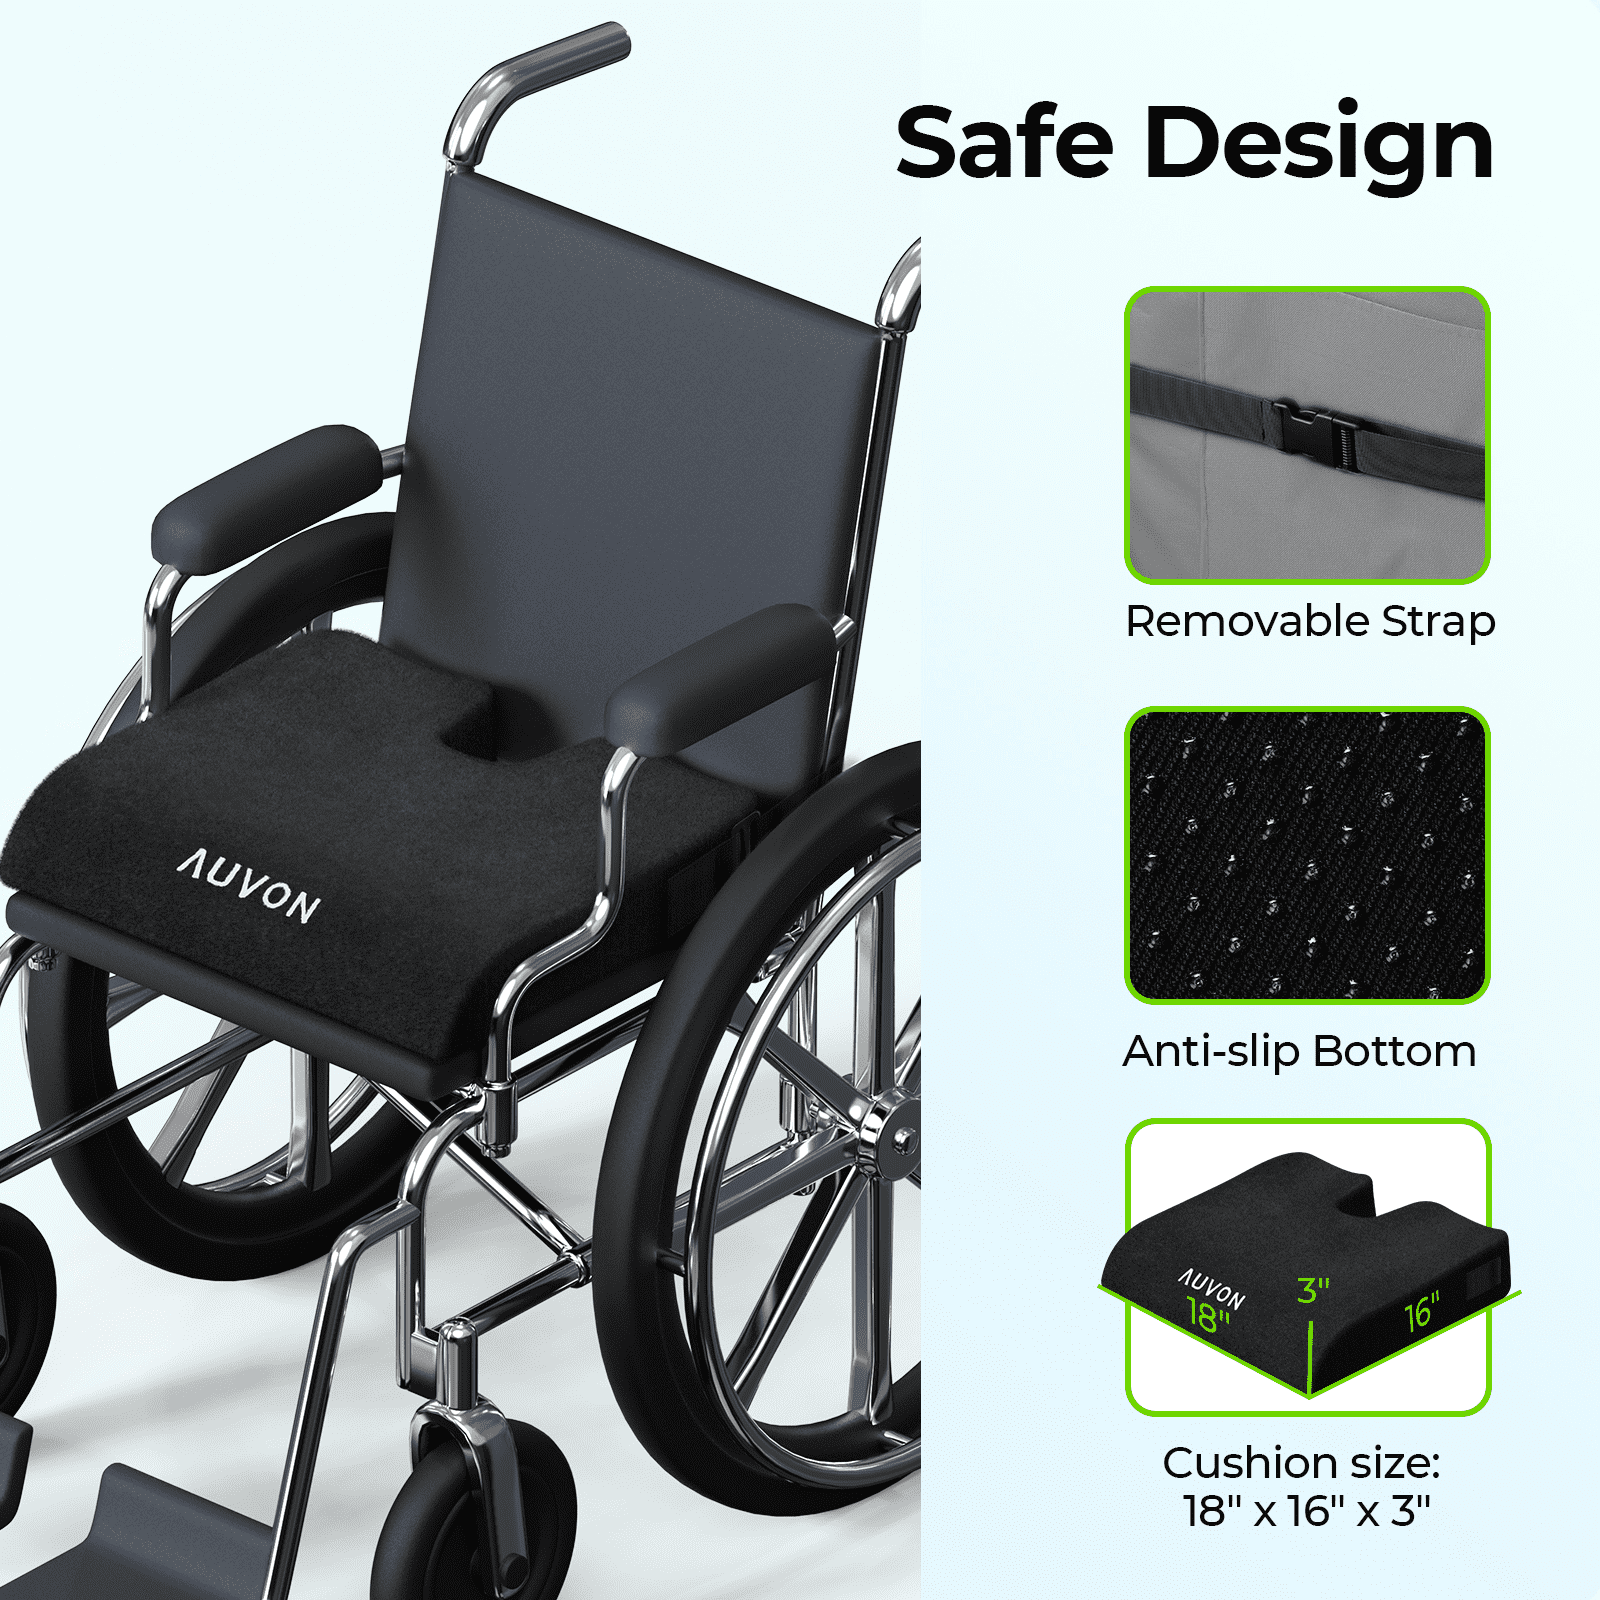 AUVON Ergonomic Anti-slip Wheelchair Cushions, Front High Rear Low